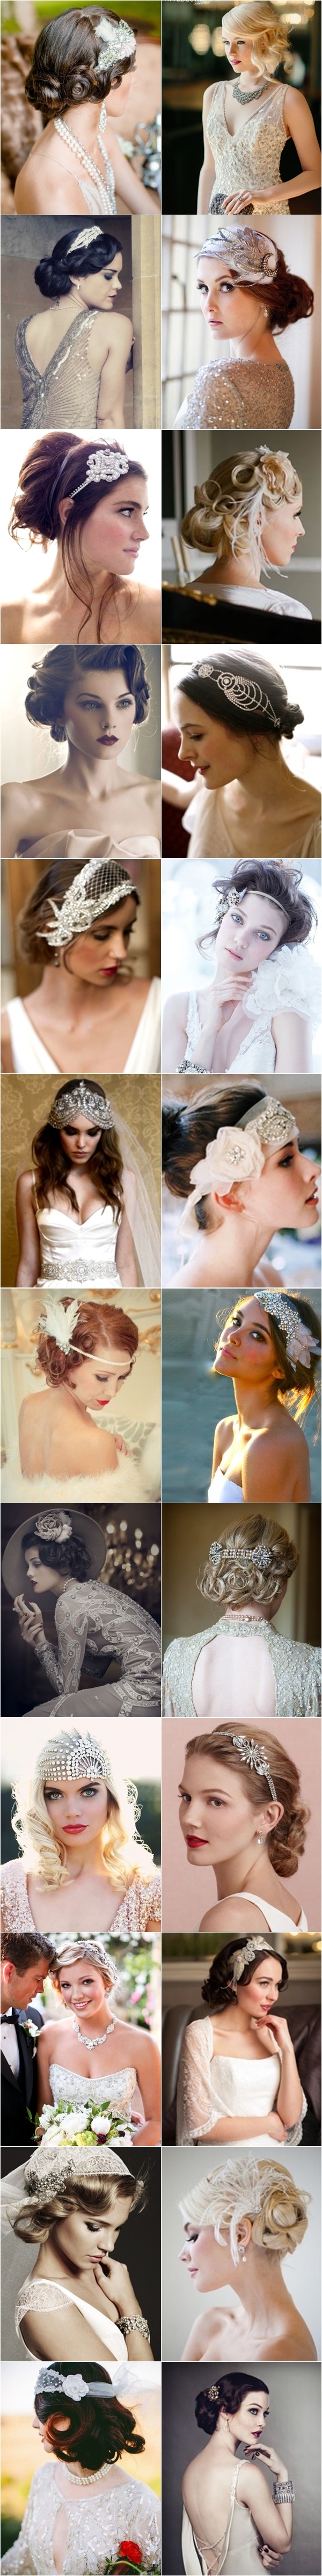 Wedding Philippines - 1920s Gatsby Glam Inspired Hairstyles